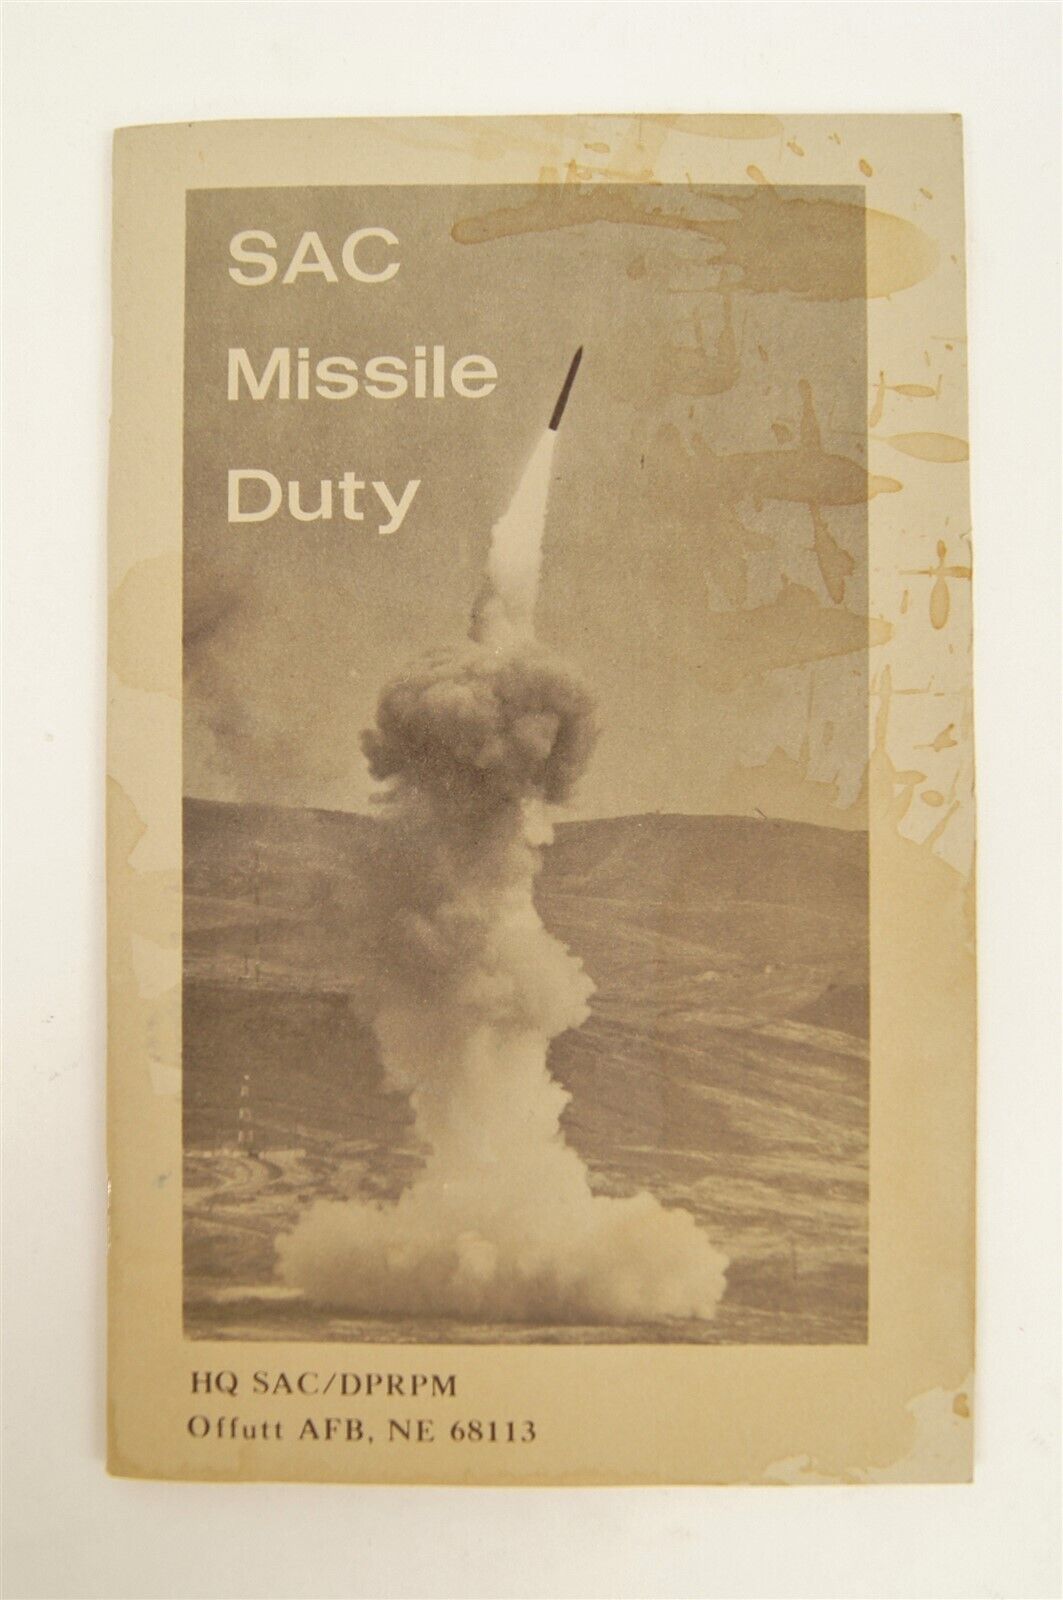 1974 Vietnam Era US Air Force SAC Missile Duty Handbook